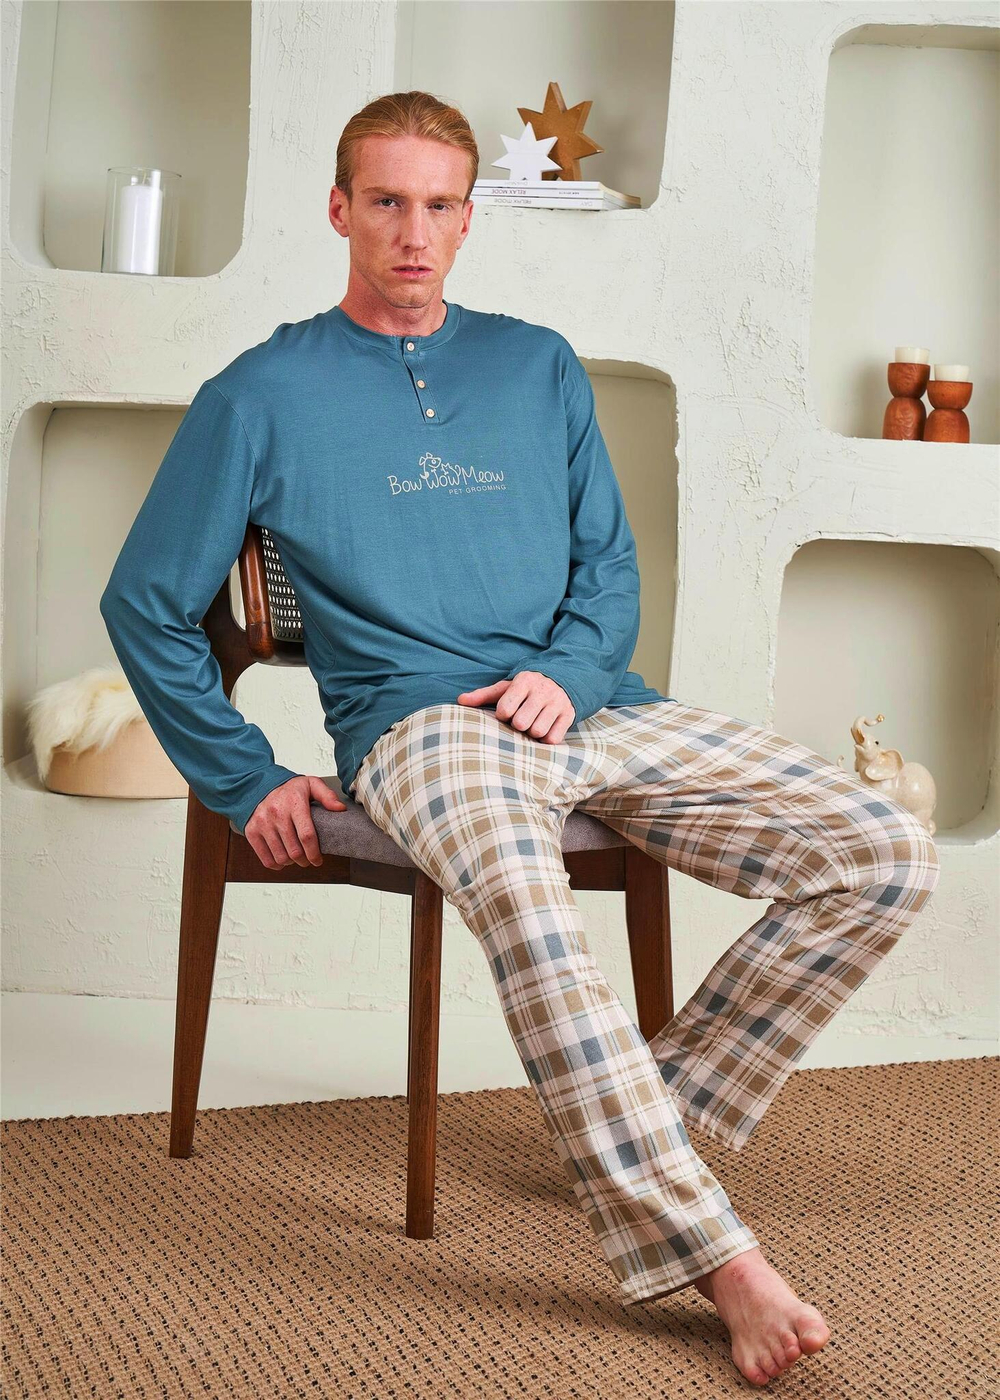 RELAX MODE - Пижама мужская пижама мужская со штанами - 10799